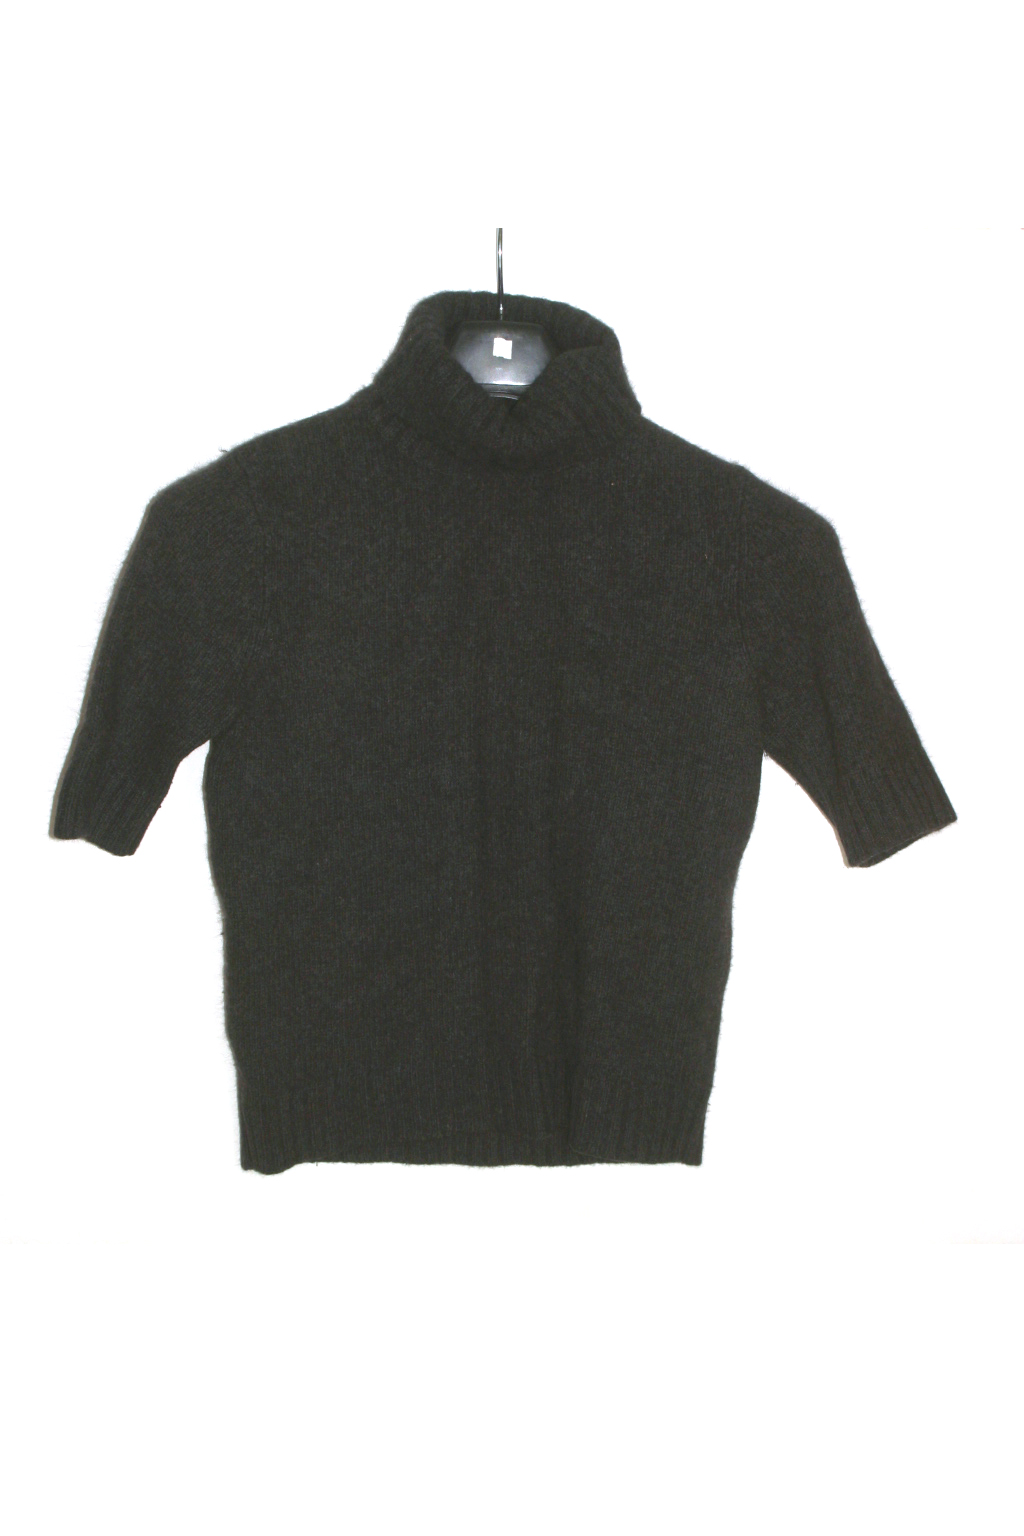 Thrift Shop Sweater Second Hand Lauren by Ralph Lauren Charcoal Med Turtleneck SS Top